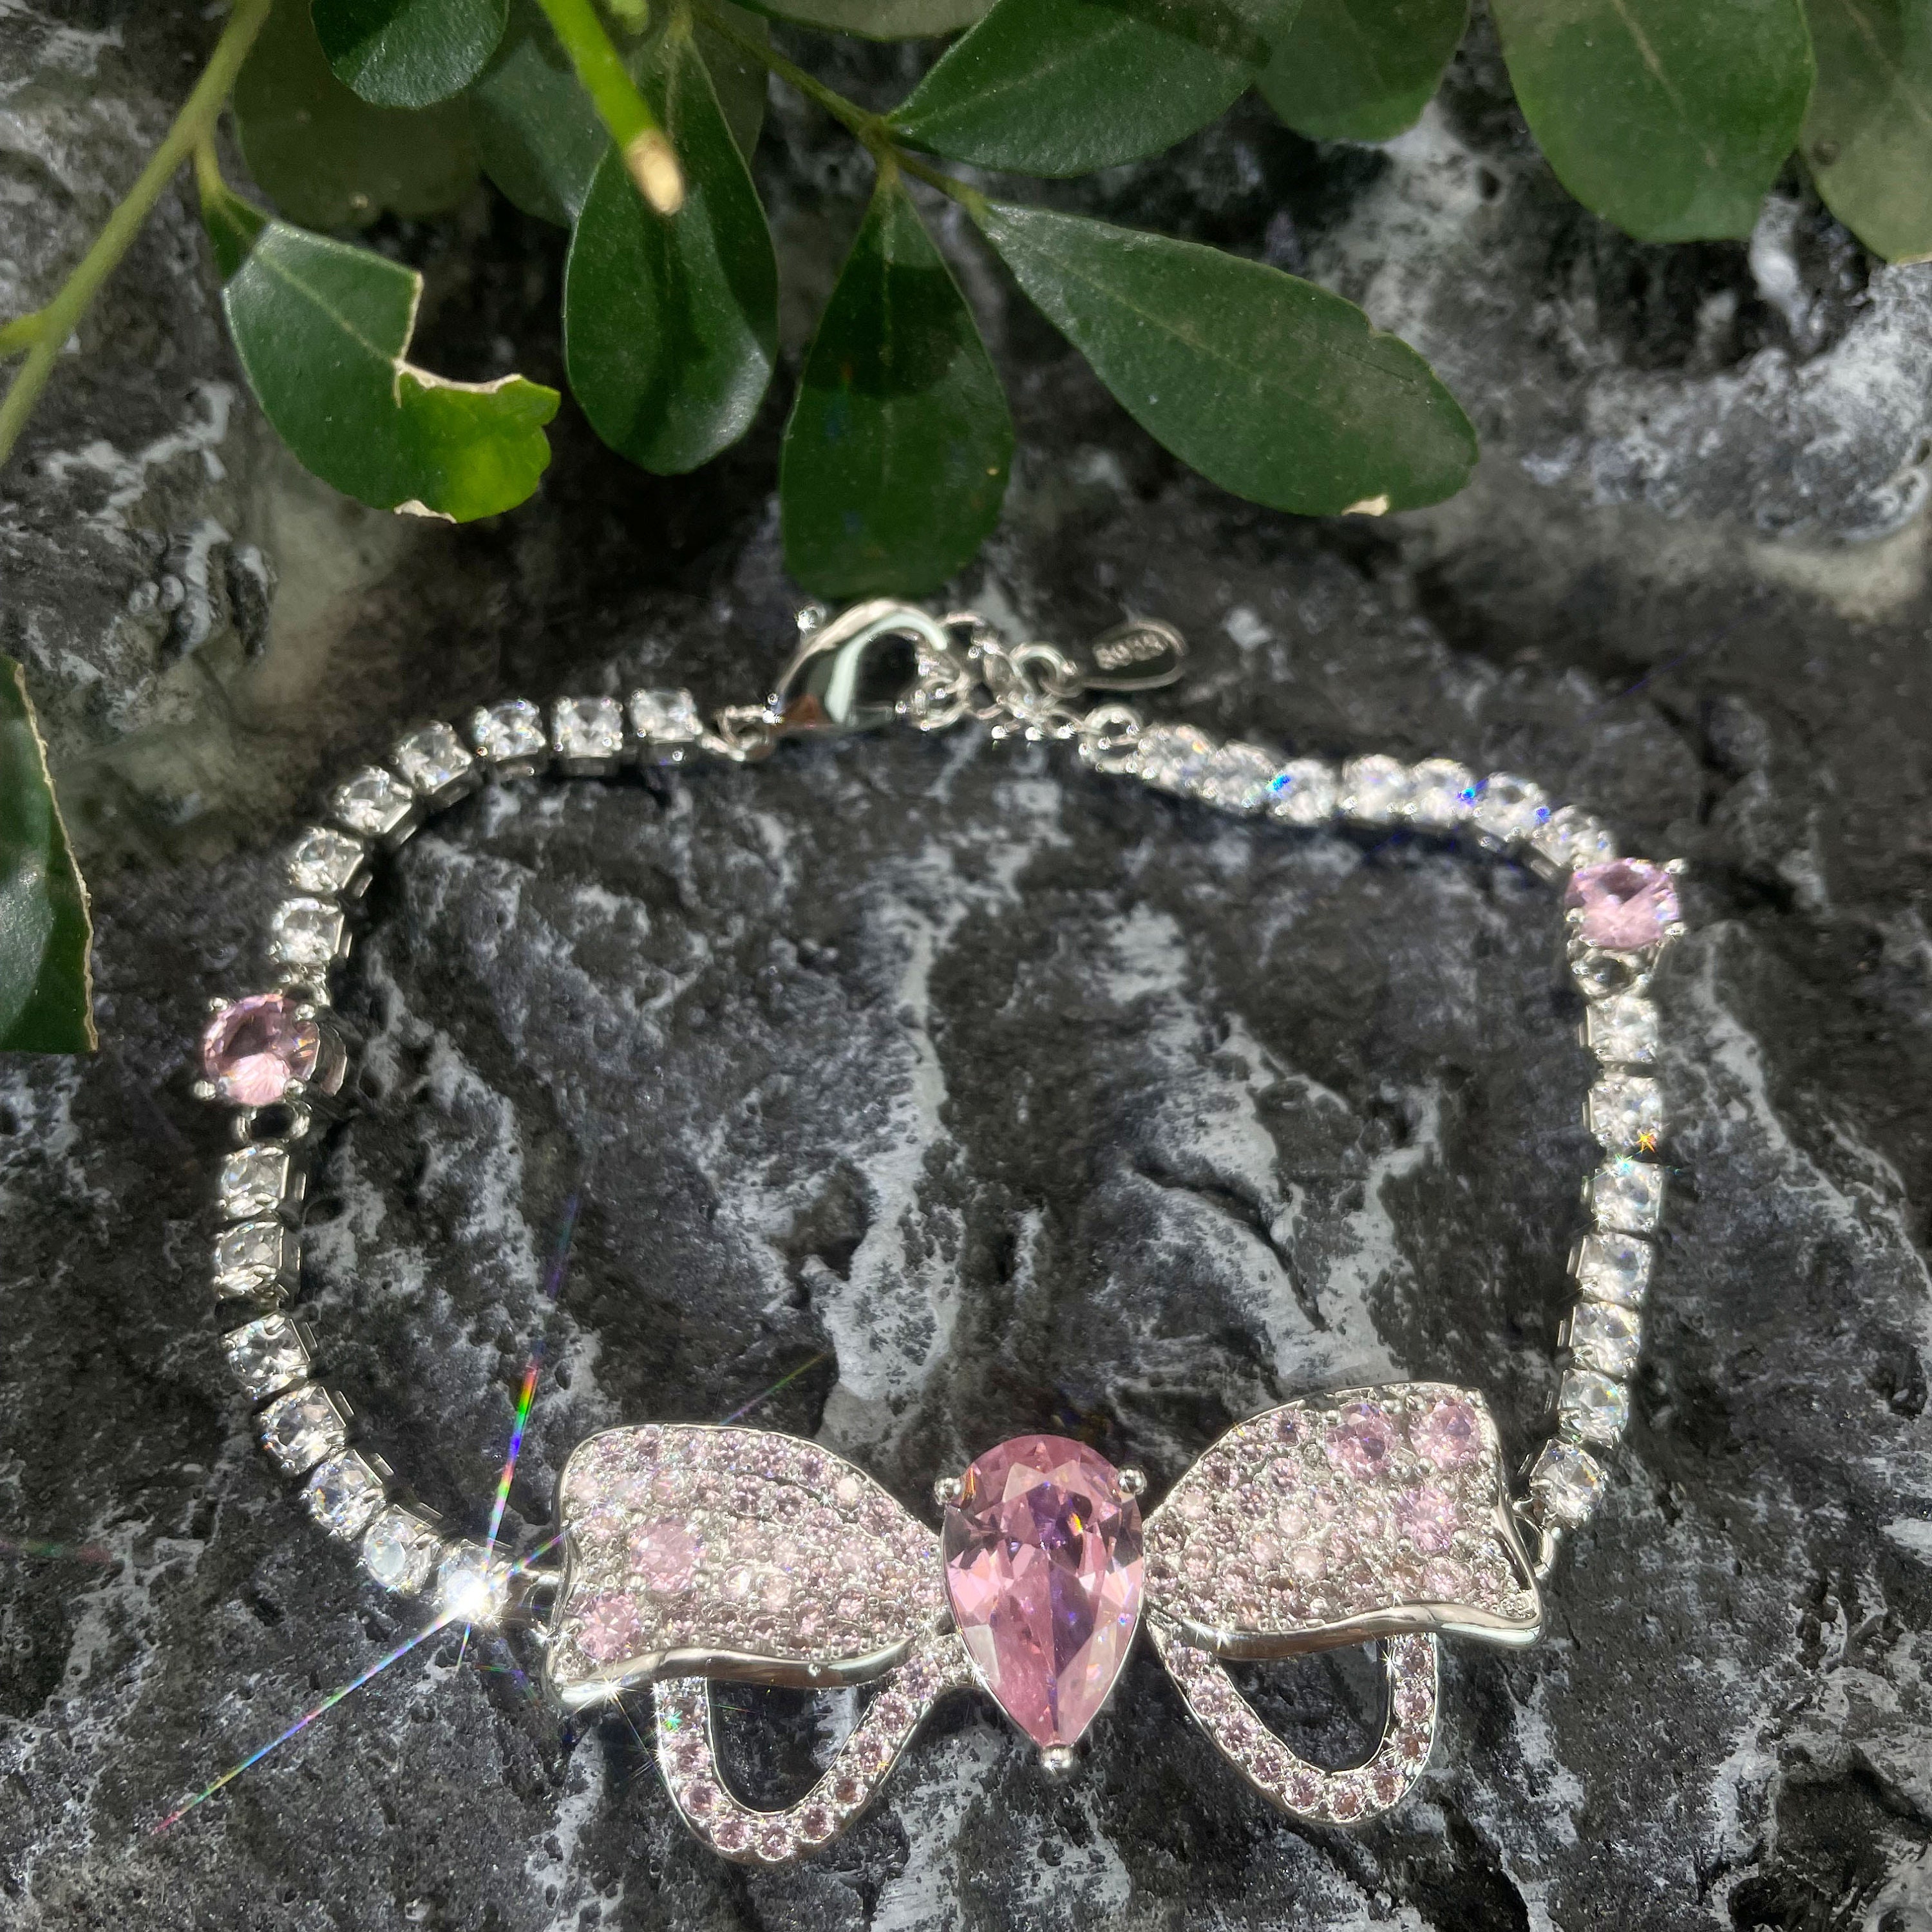 Dainty Butterfly Zircon Cluster Pendant Baby Pink String Bracelet